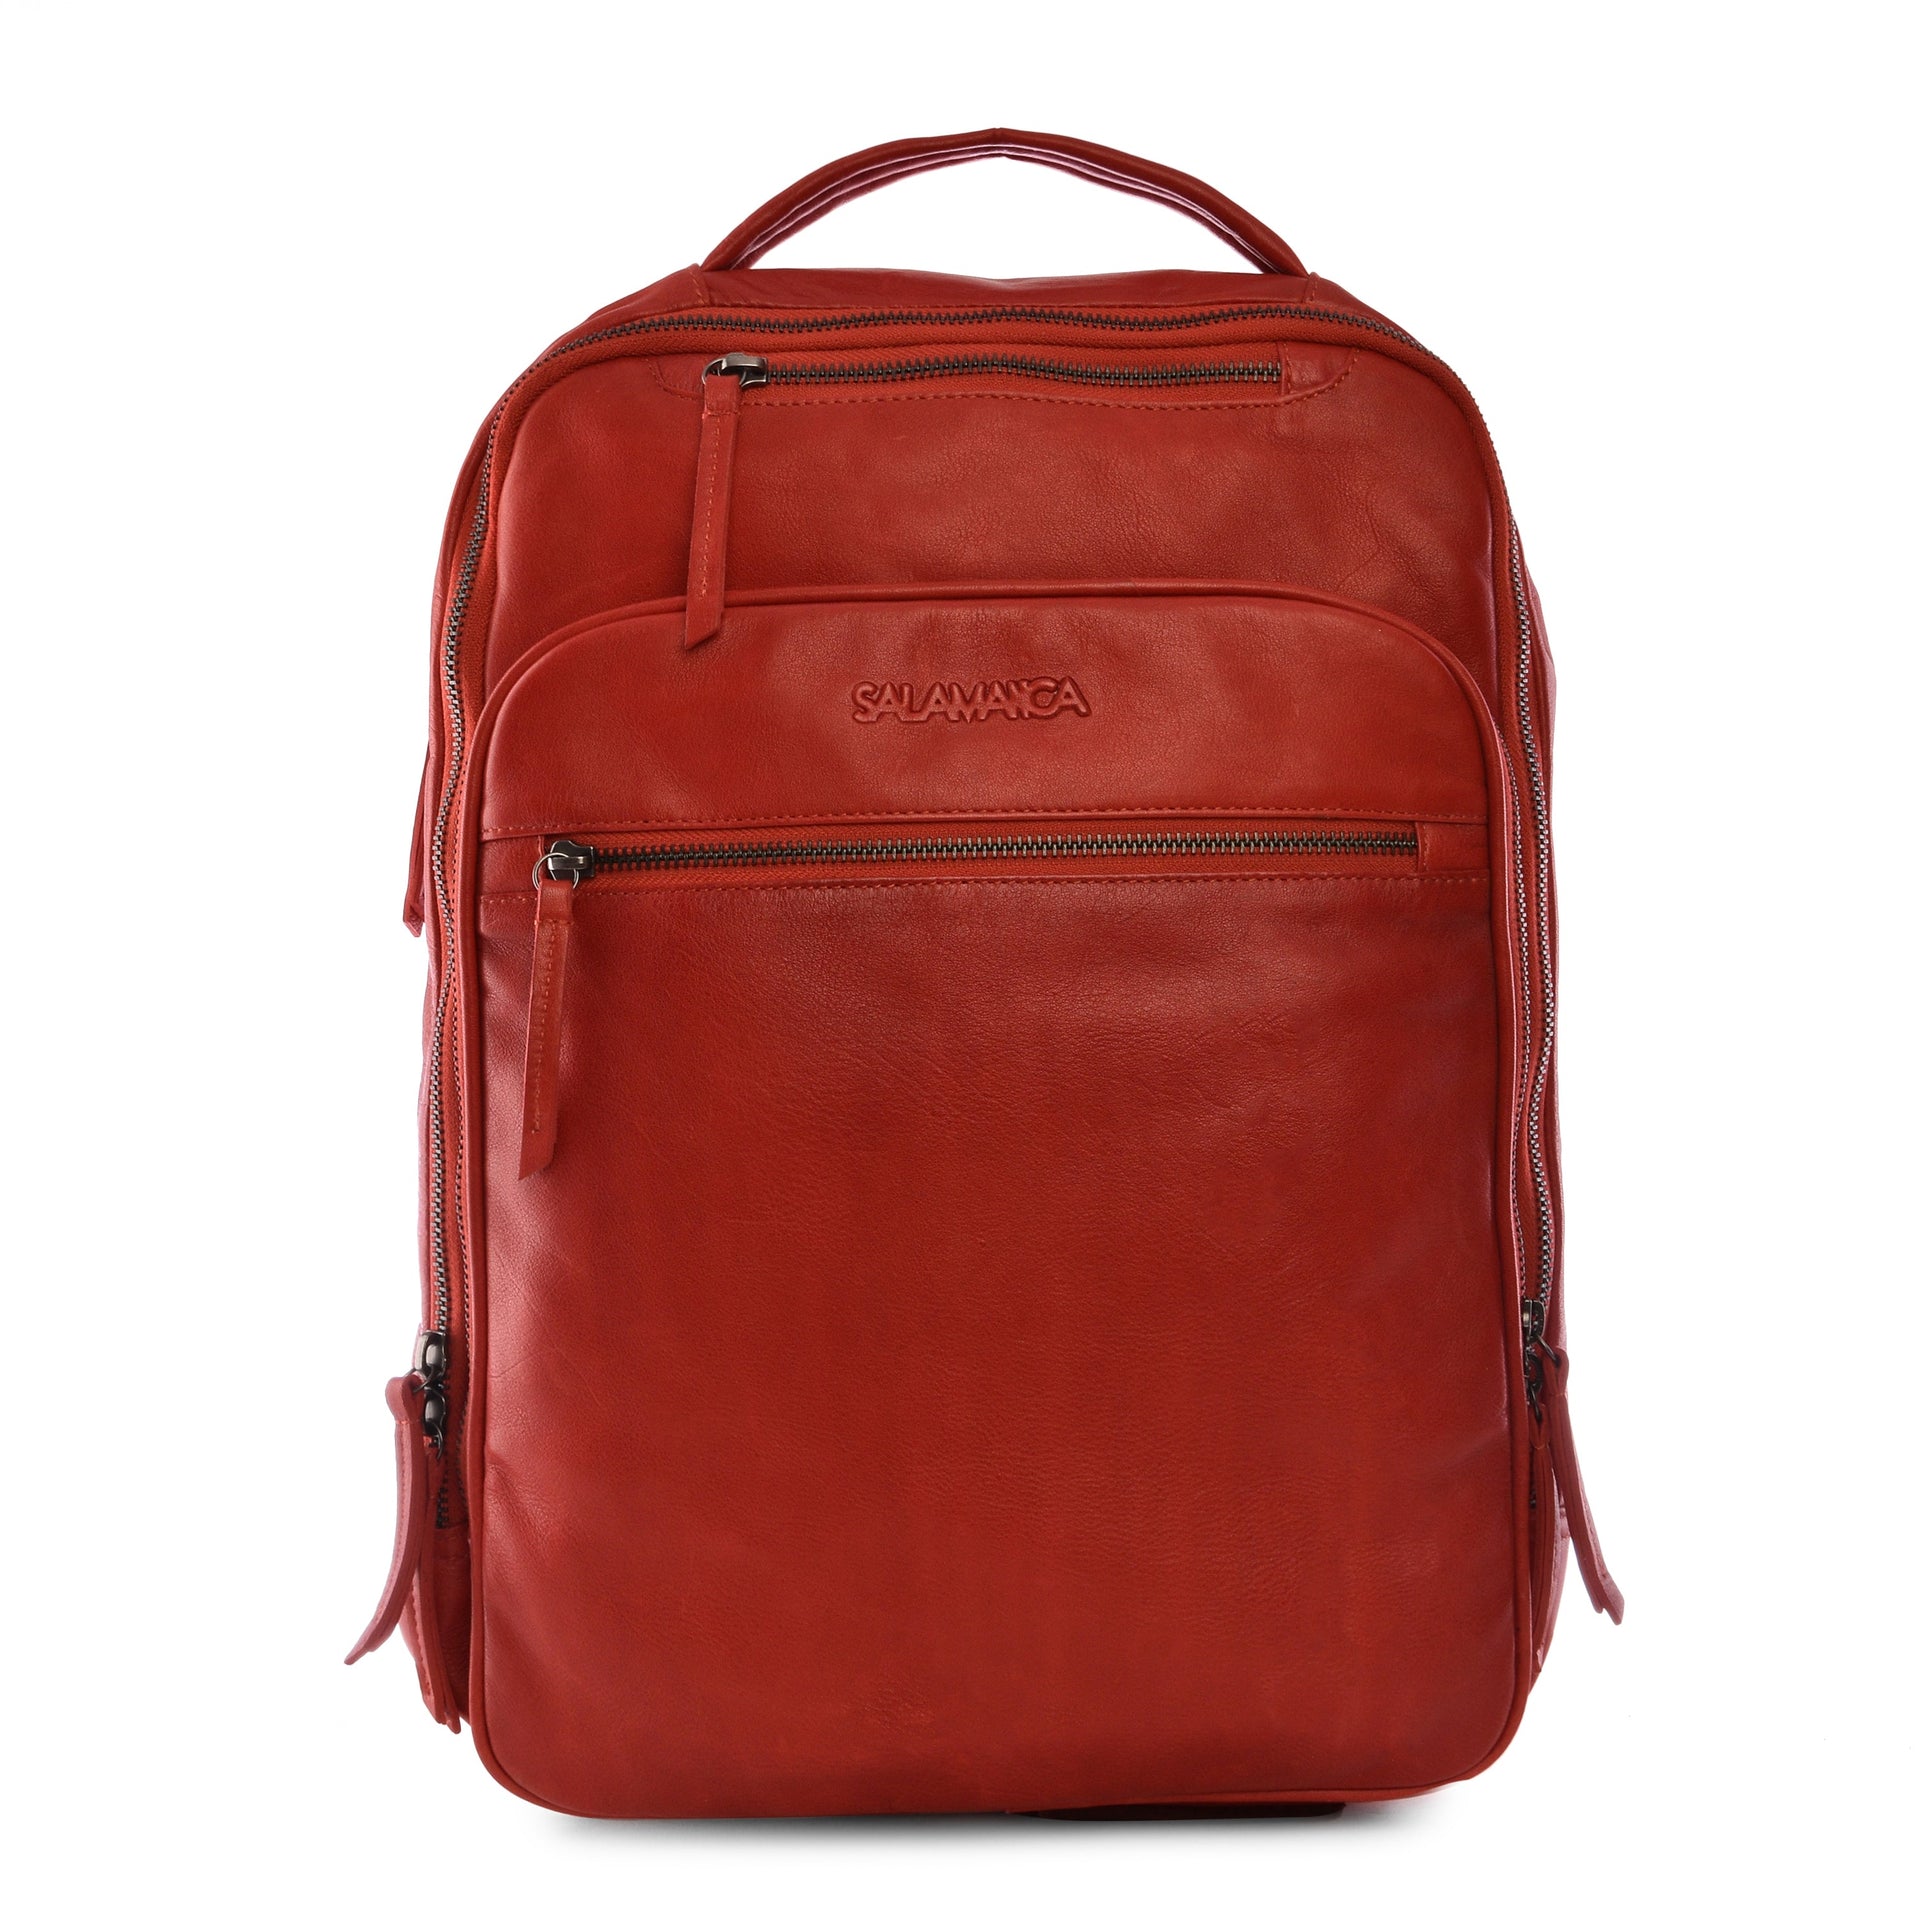 Oliver Blake Backpack - Tango Red - Backpack